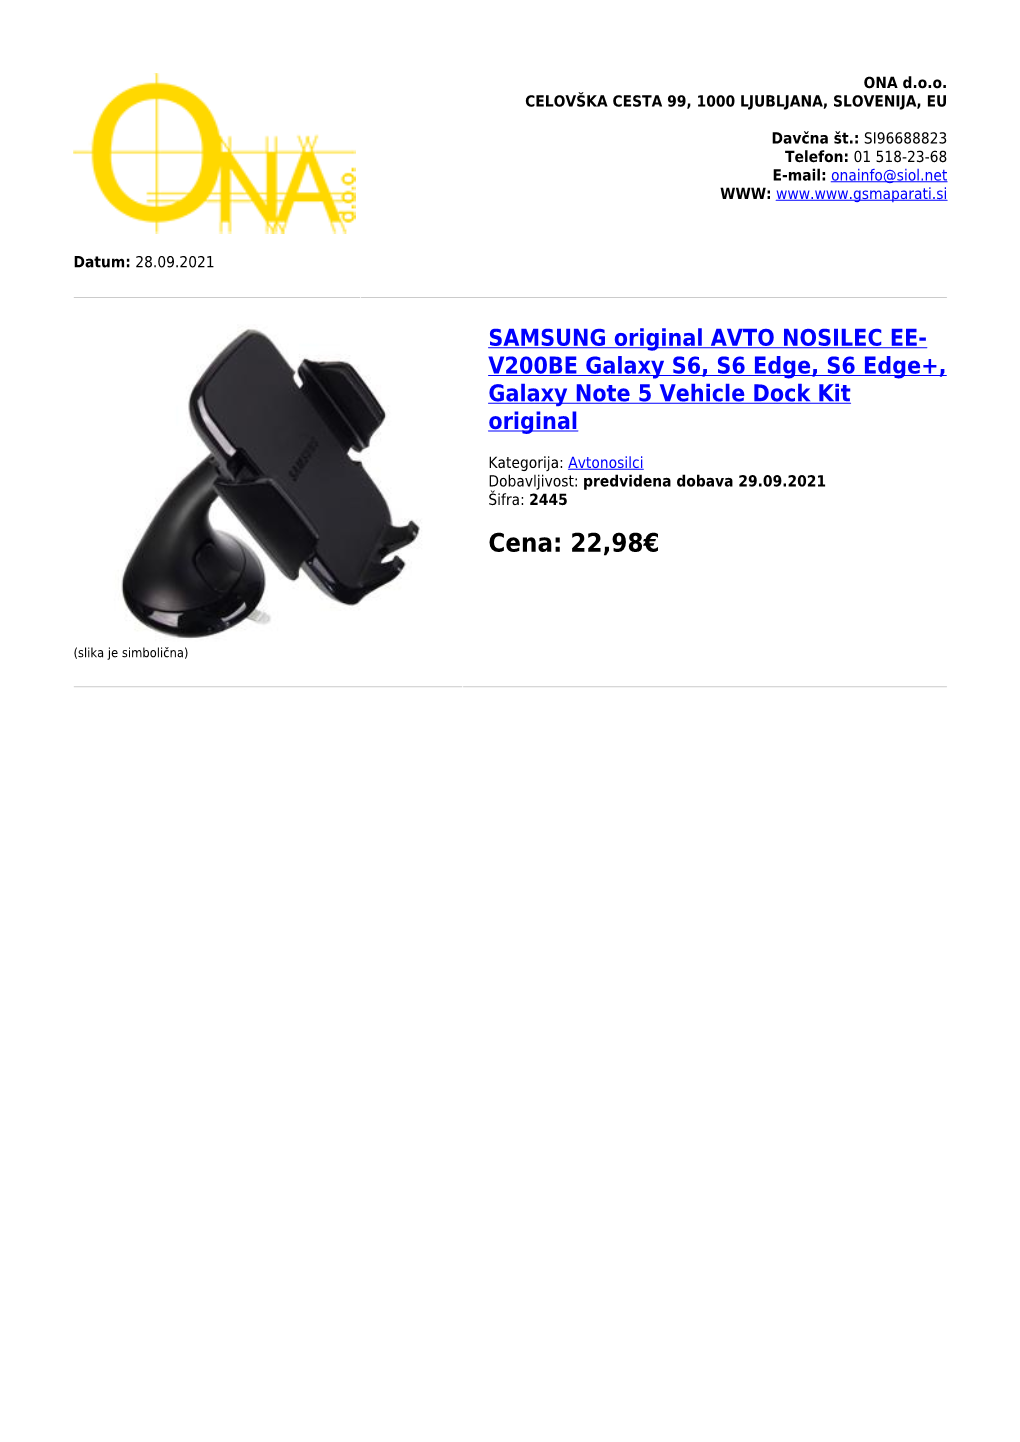 SAMSUNG Original AVTO NOSILEC EE-V200BE Galaxy S6